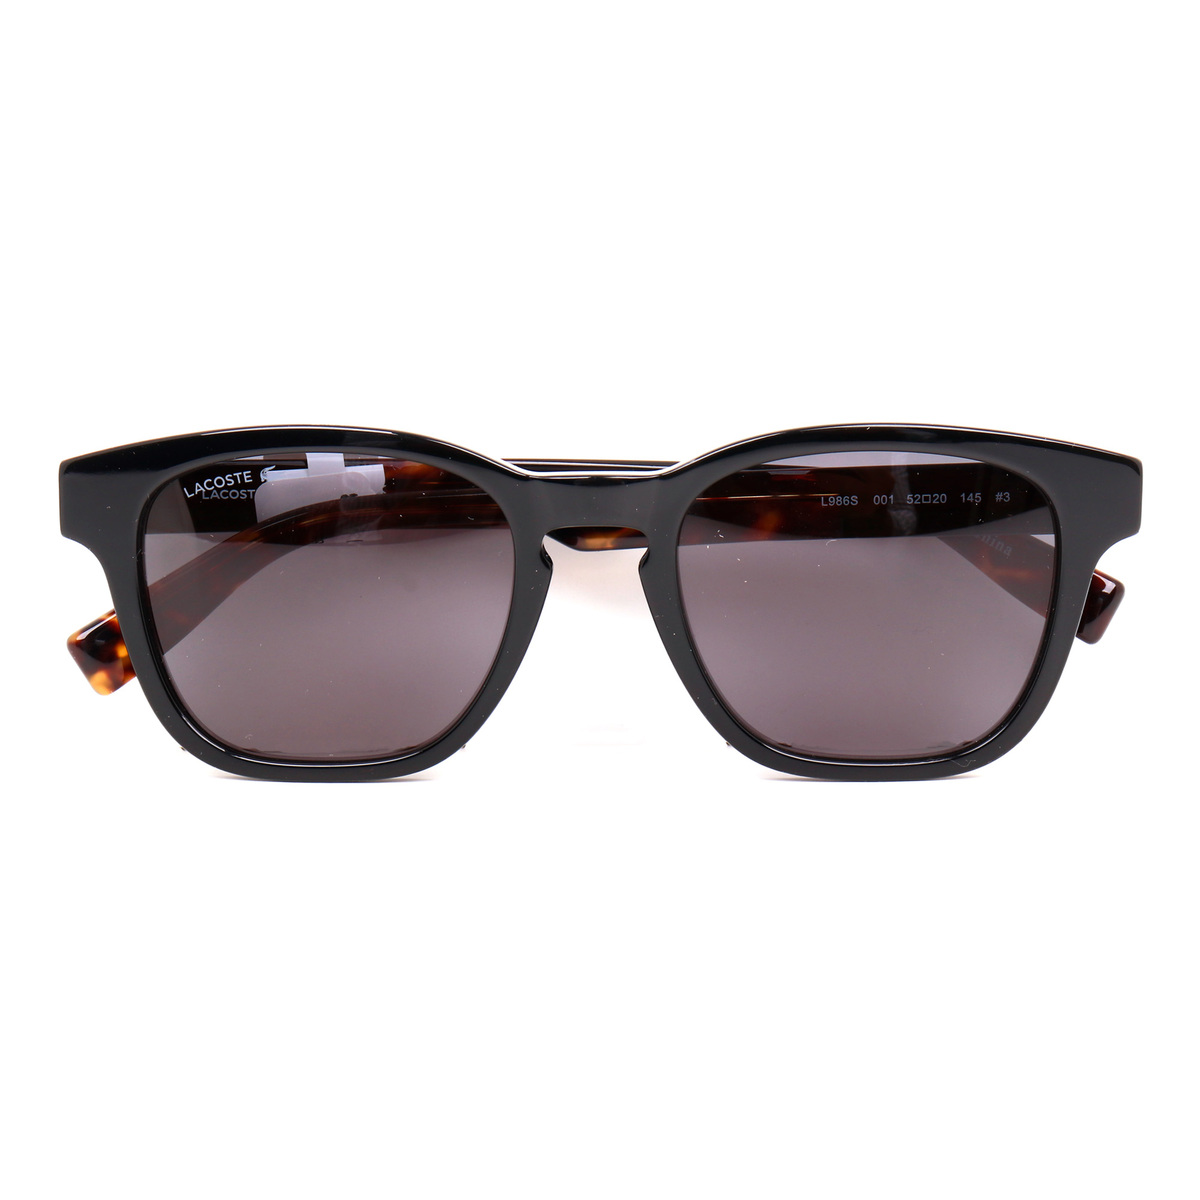 Lacoste Men's Rectangle Sunglasses, Grey, 986S5220